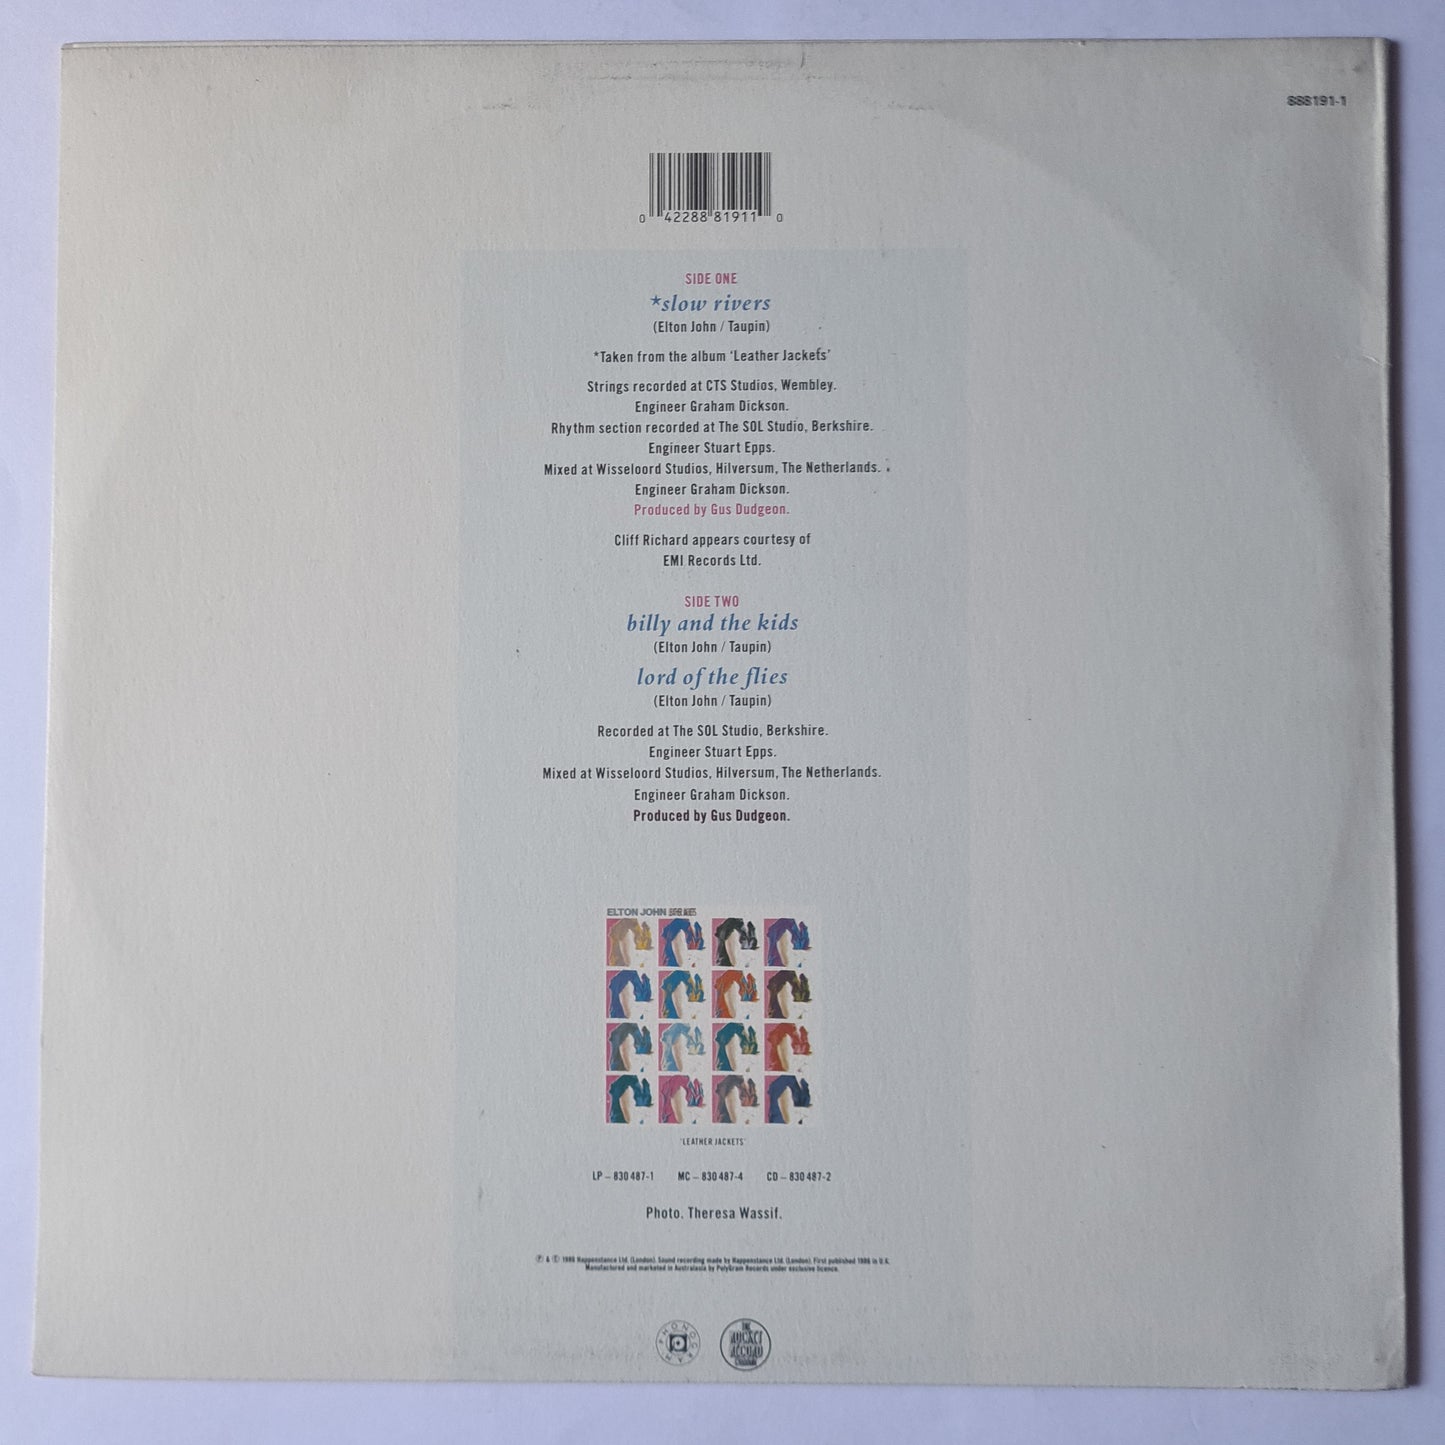 Elton John & Cliff Richard – Slow Rivers (12 Inch Single) - 1986 - Vinyl Record